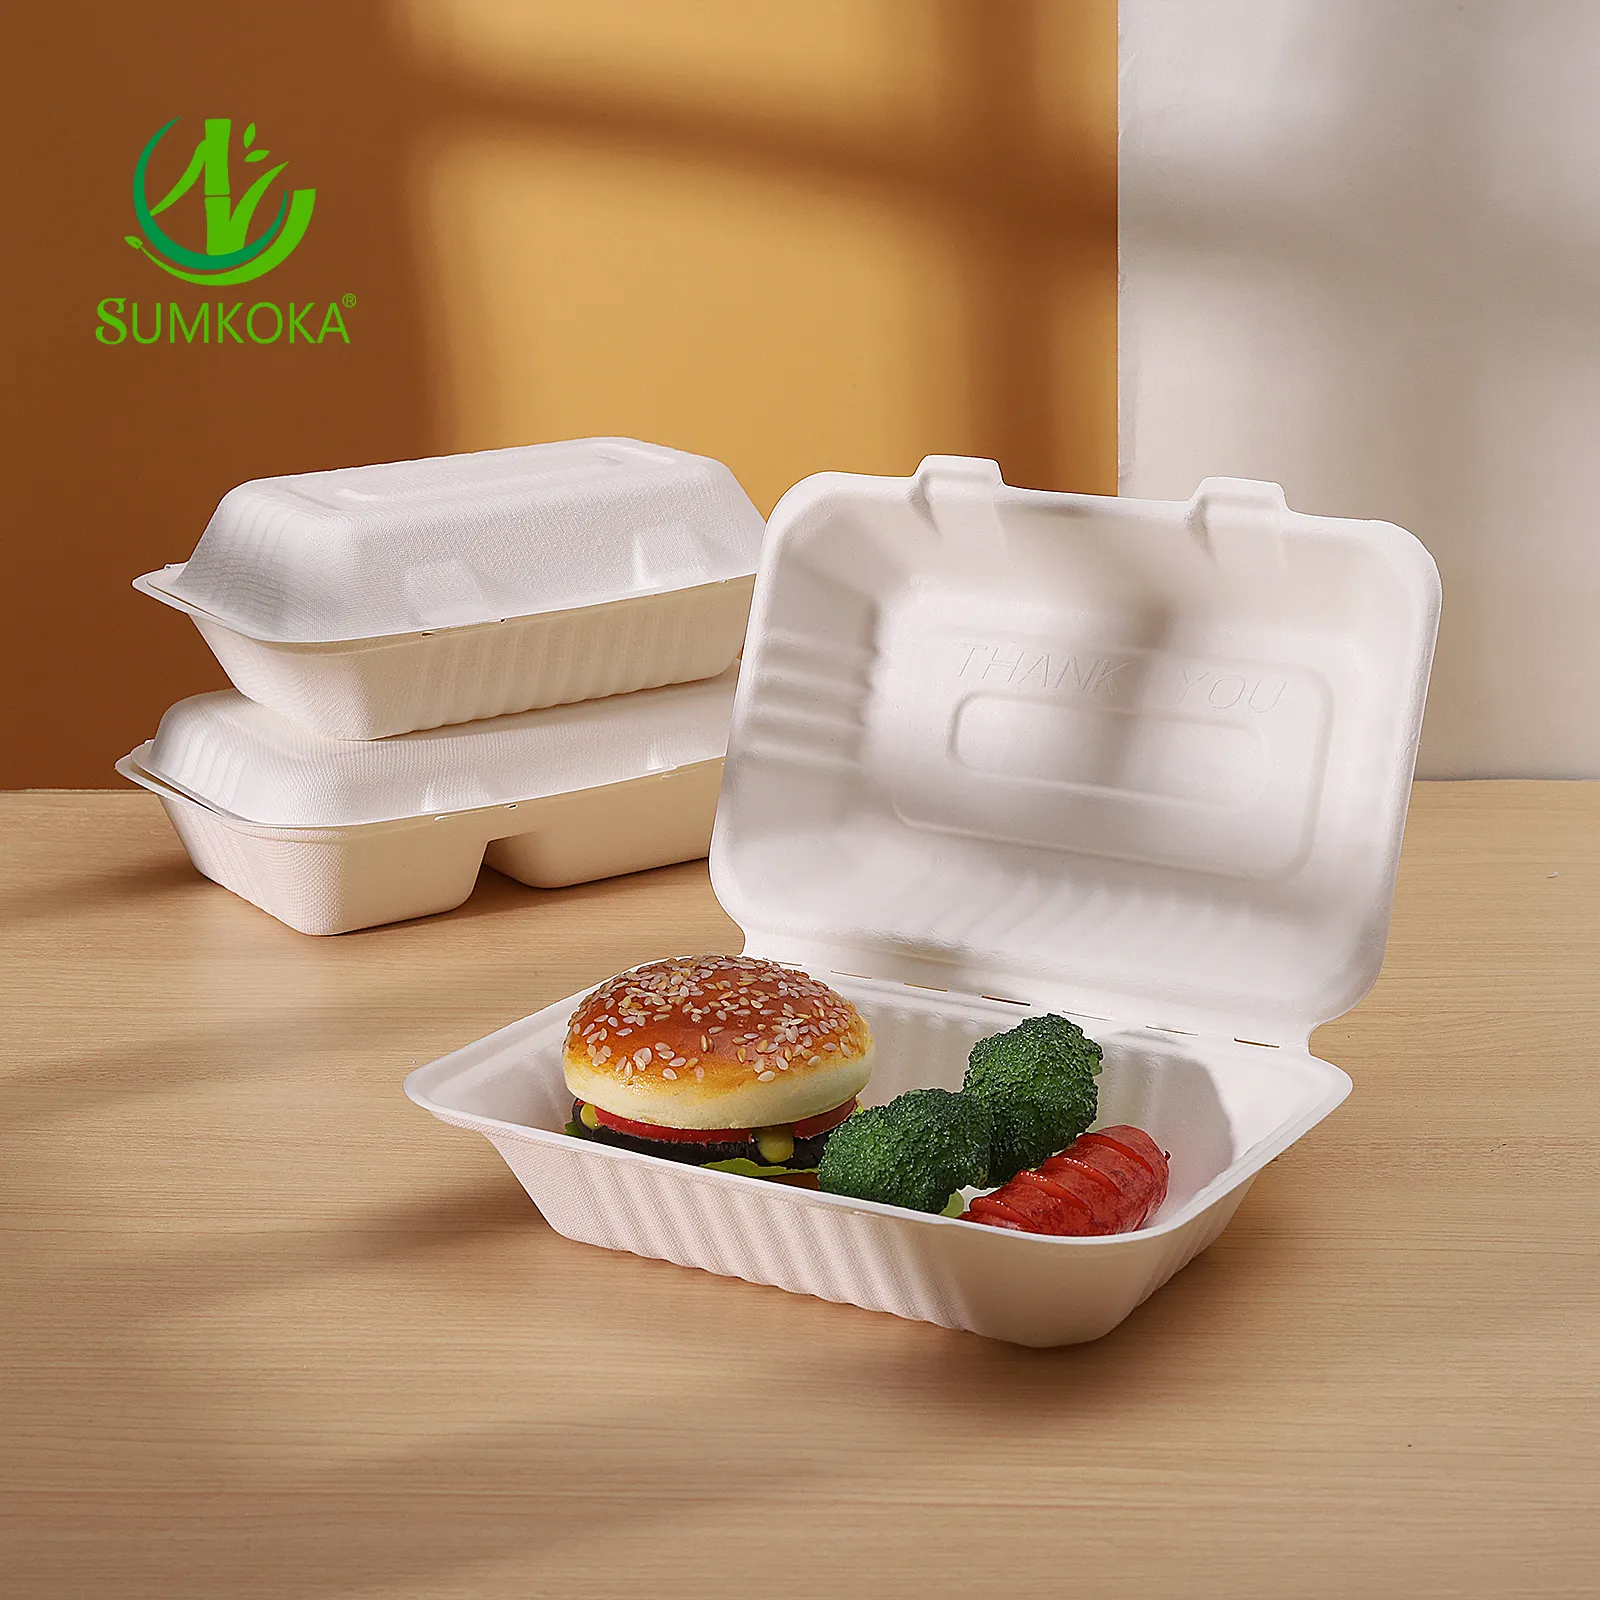 SUMKOKA PFAS libre biodegradable compostable Pulpa de bagazo comida rápida Clamshell caja de almuerzo para llevar caja de embalaje de alimentos